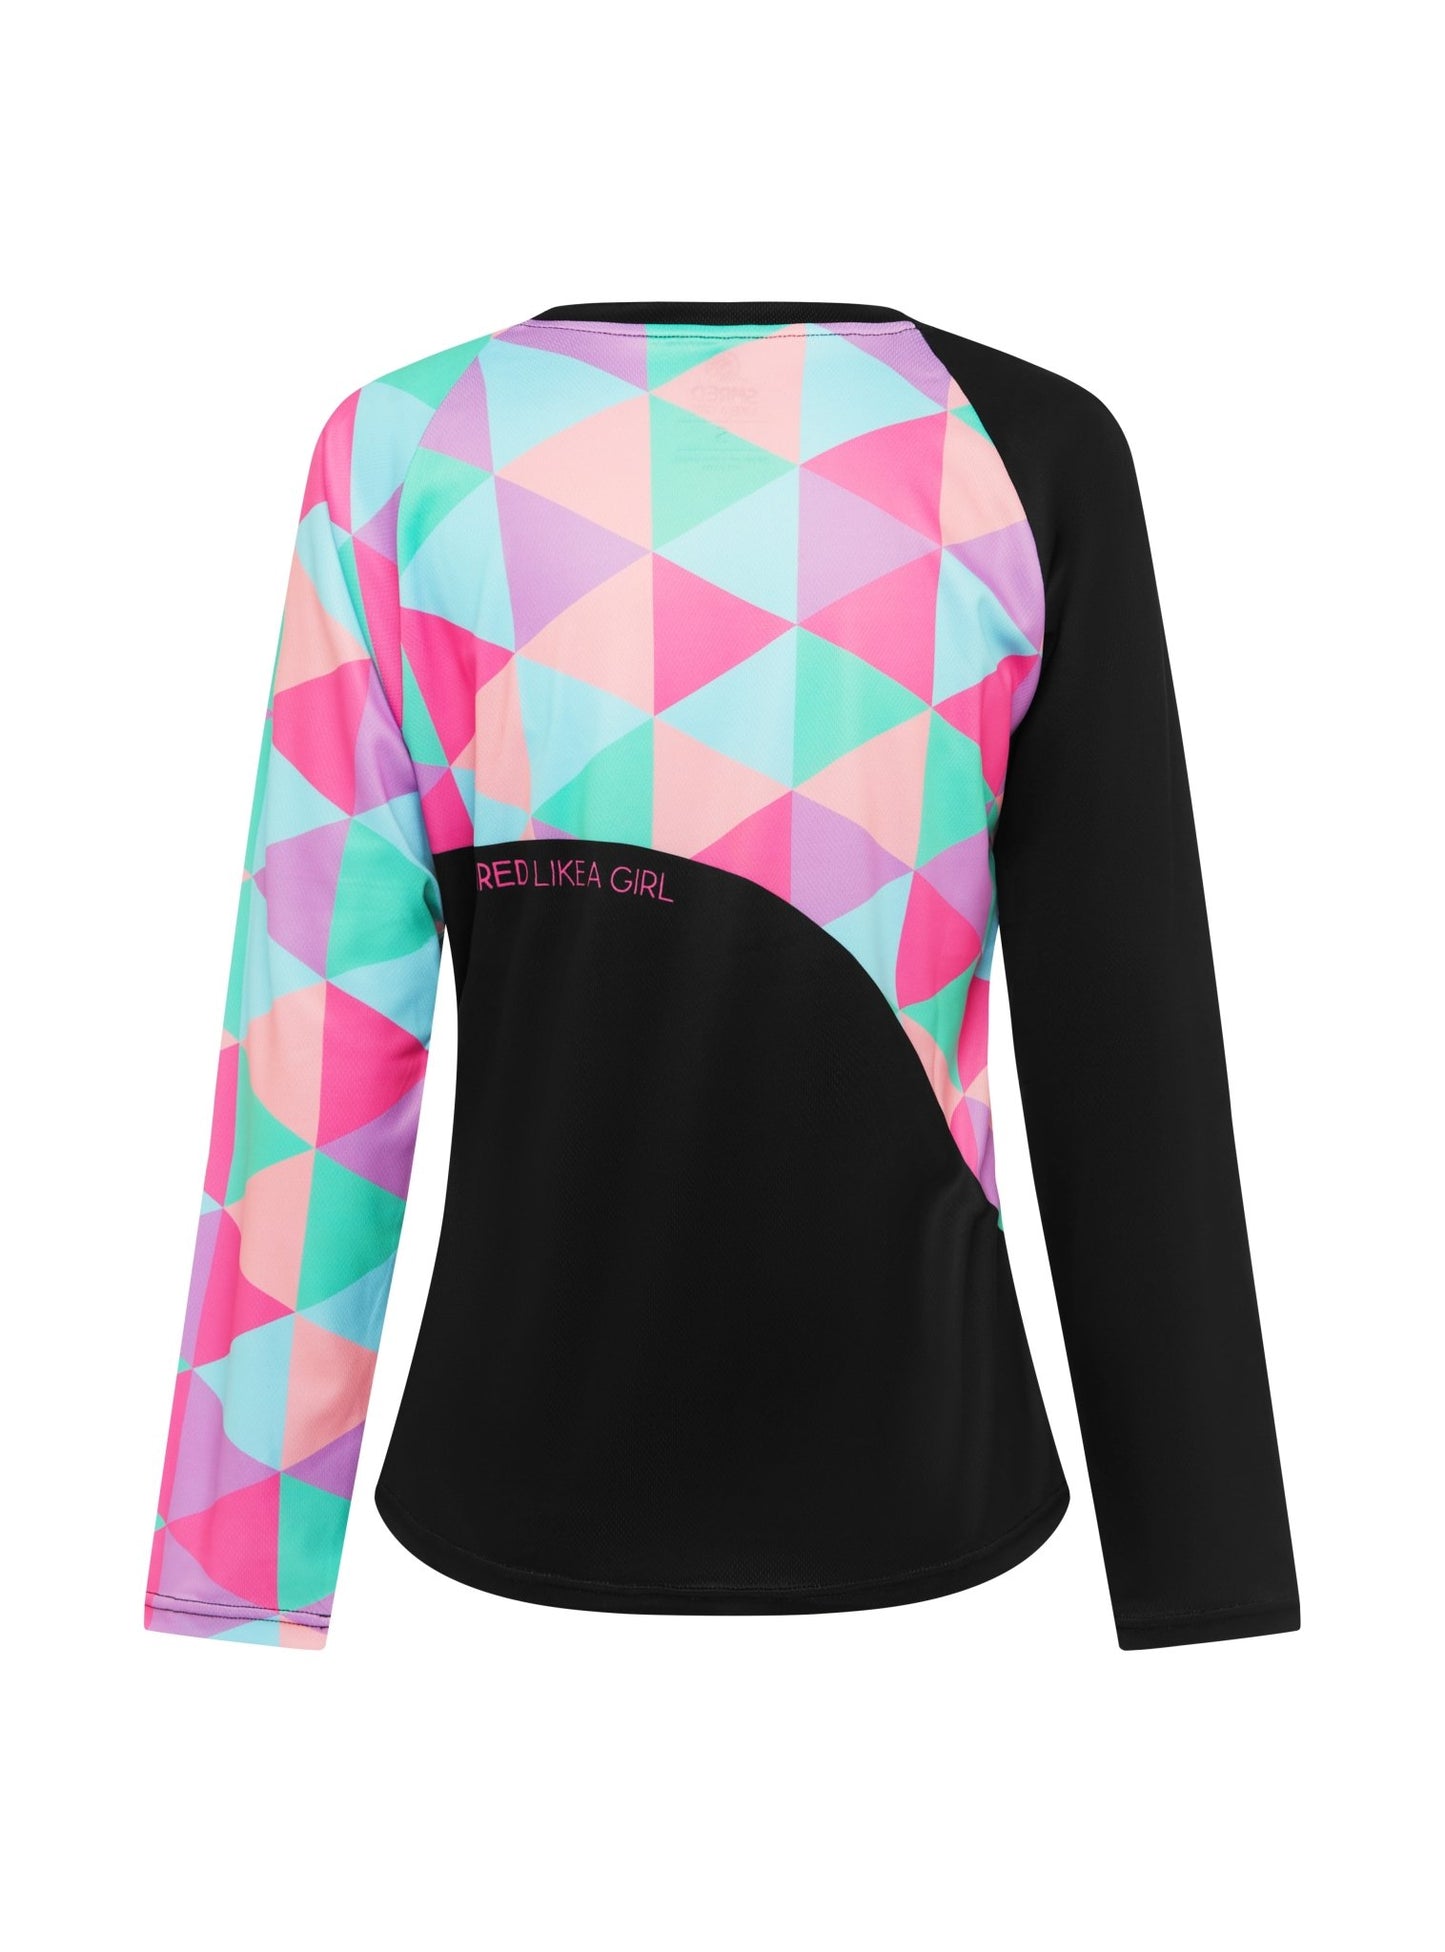 Geometric Print Womens Mountain Bike Jersey - Shred Like a Girl